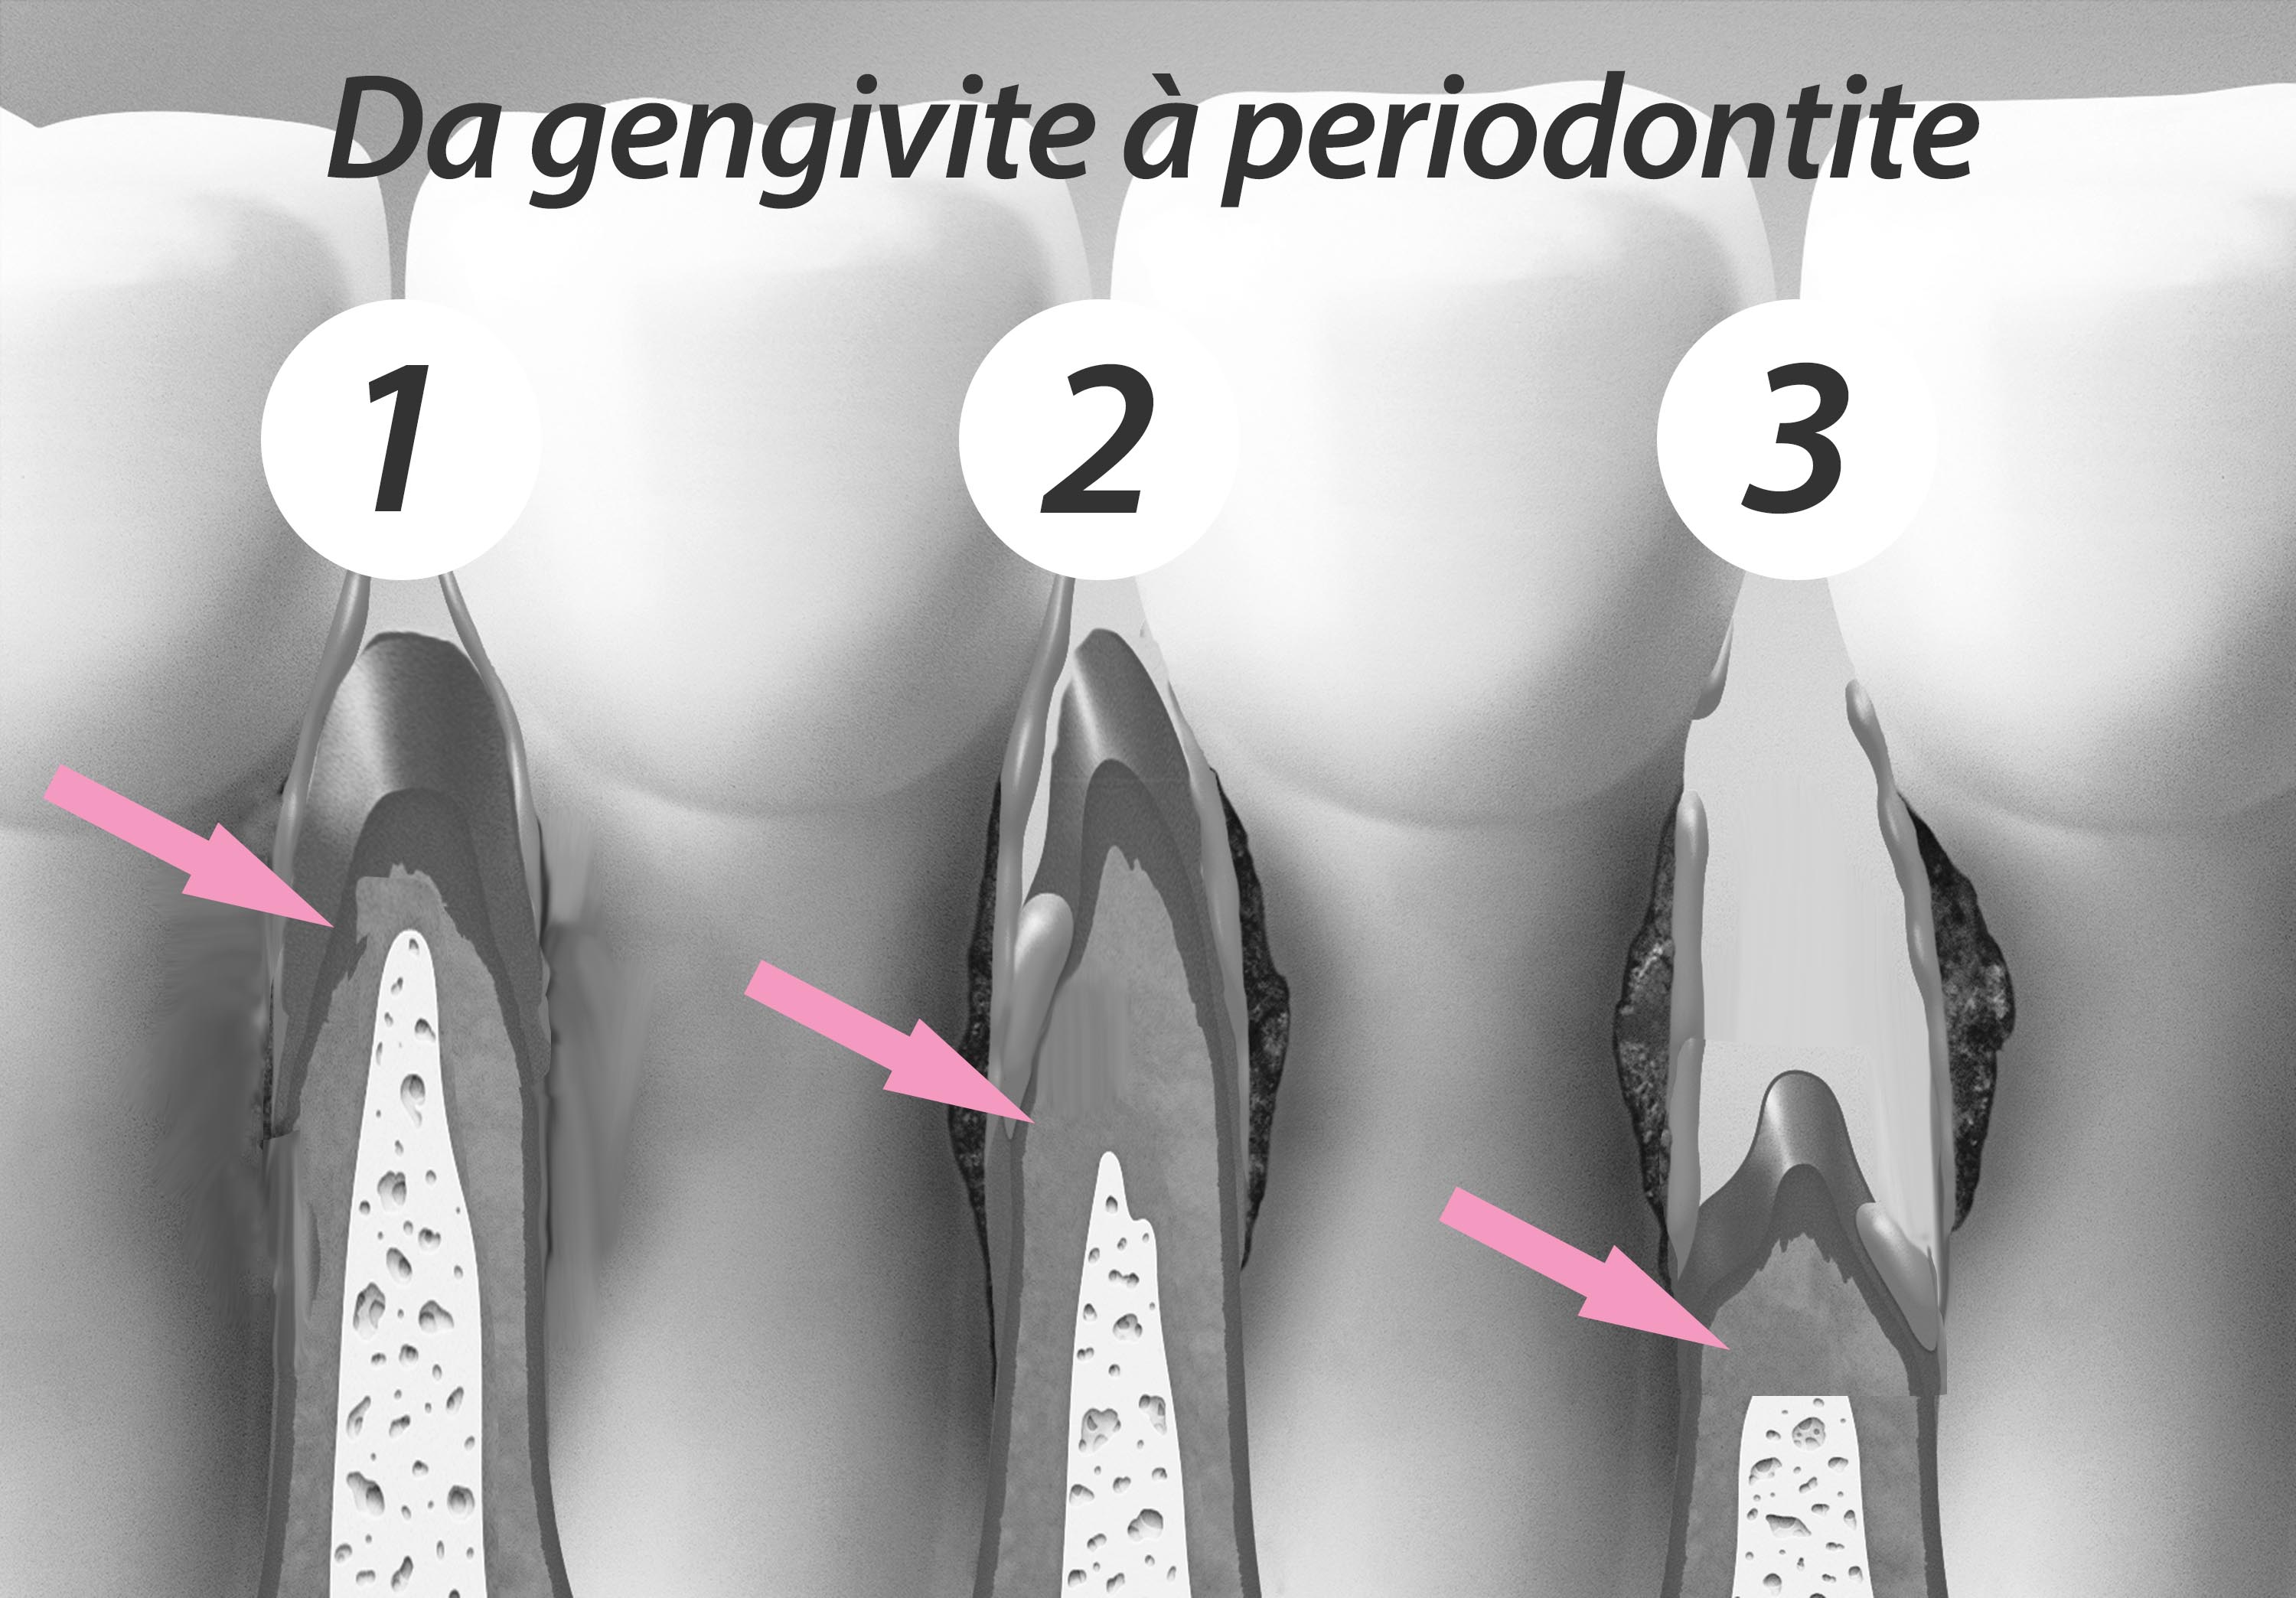 gengivite e periodontite diferença